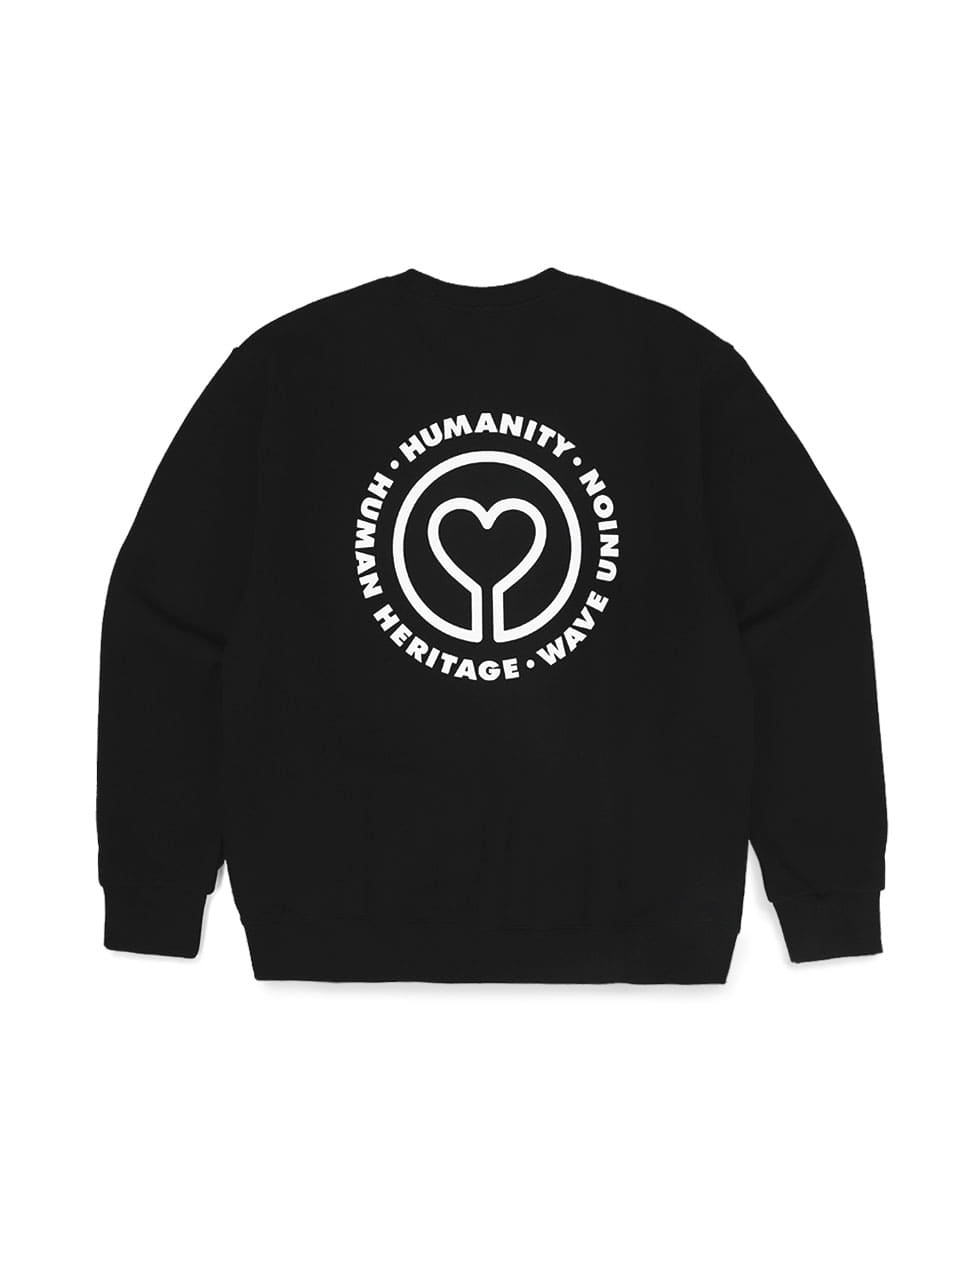 Humanity Sweatshirt black